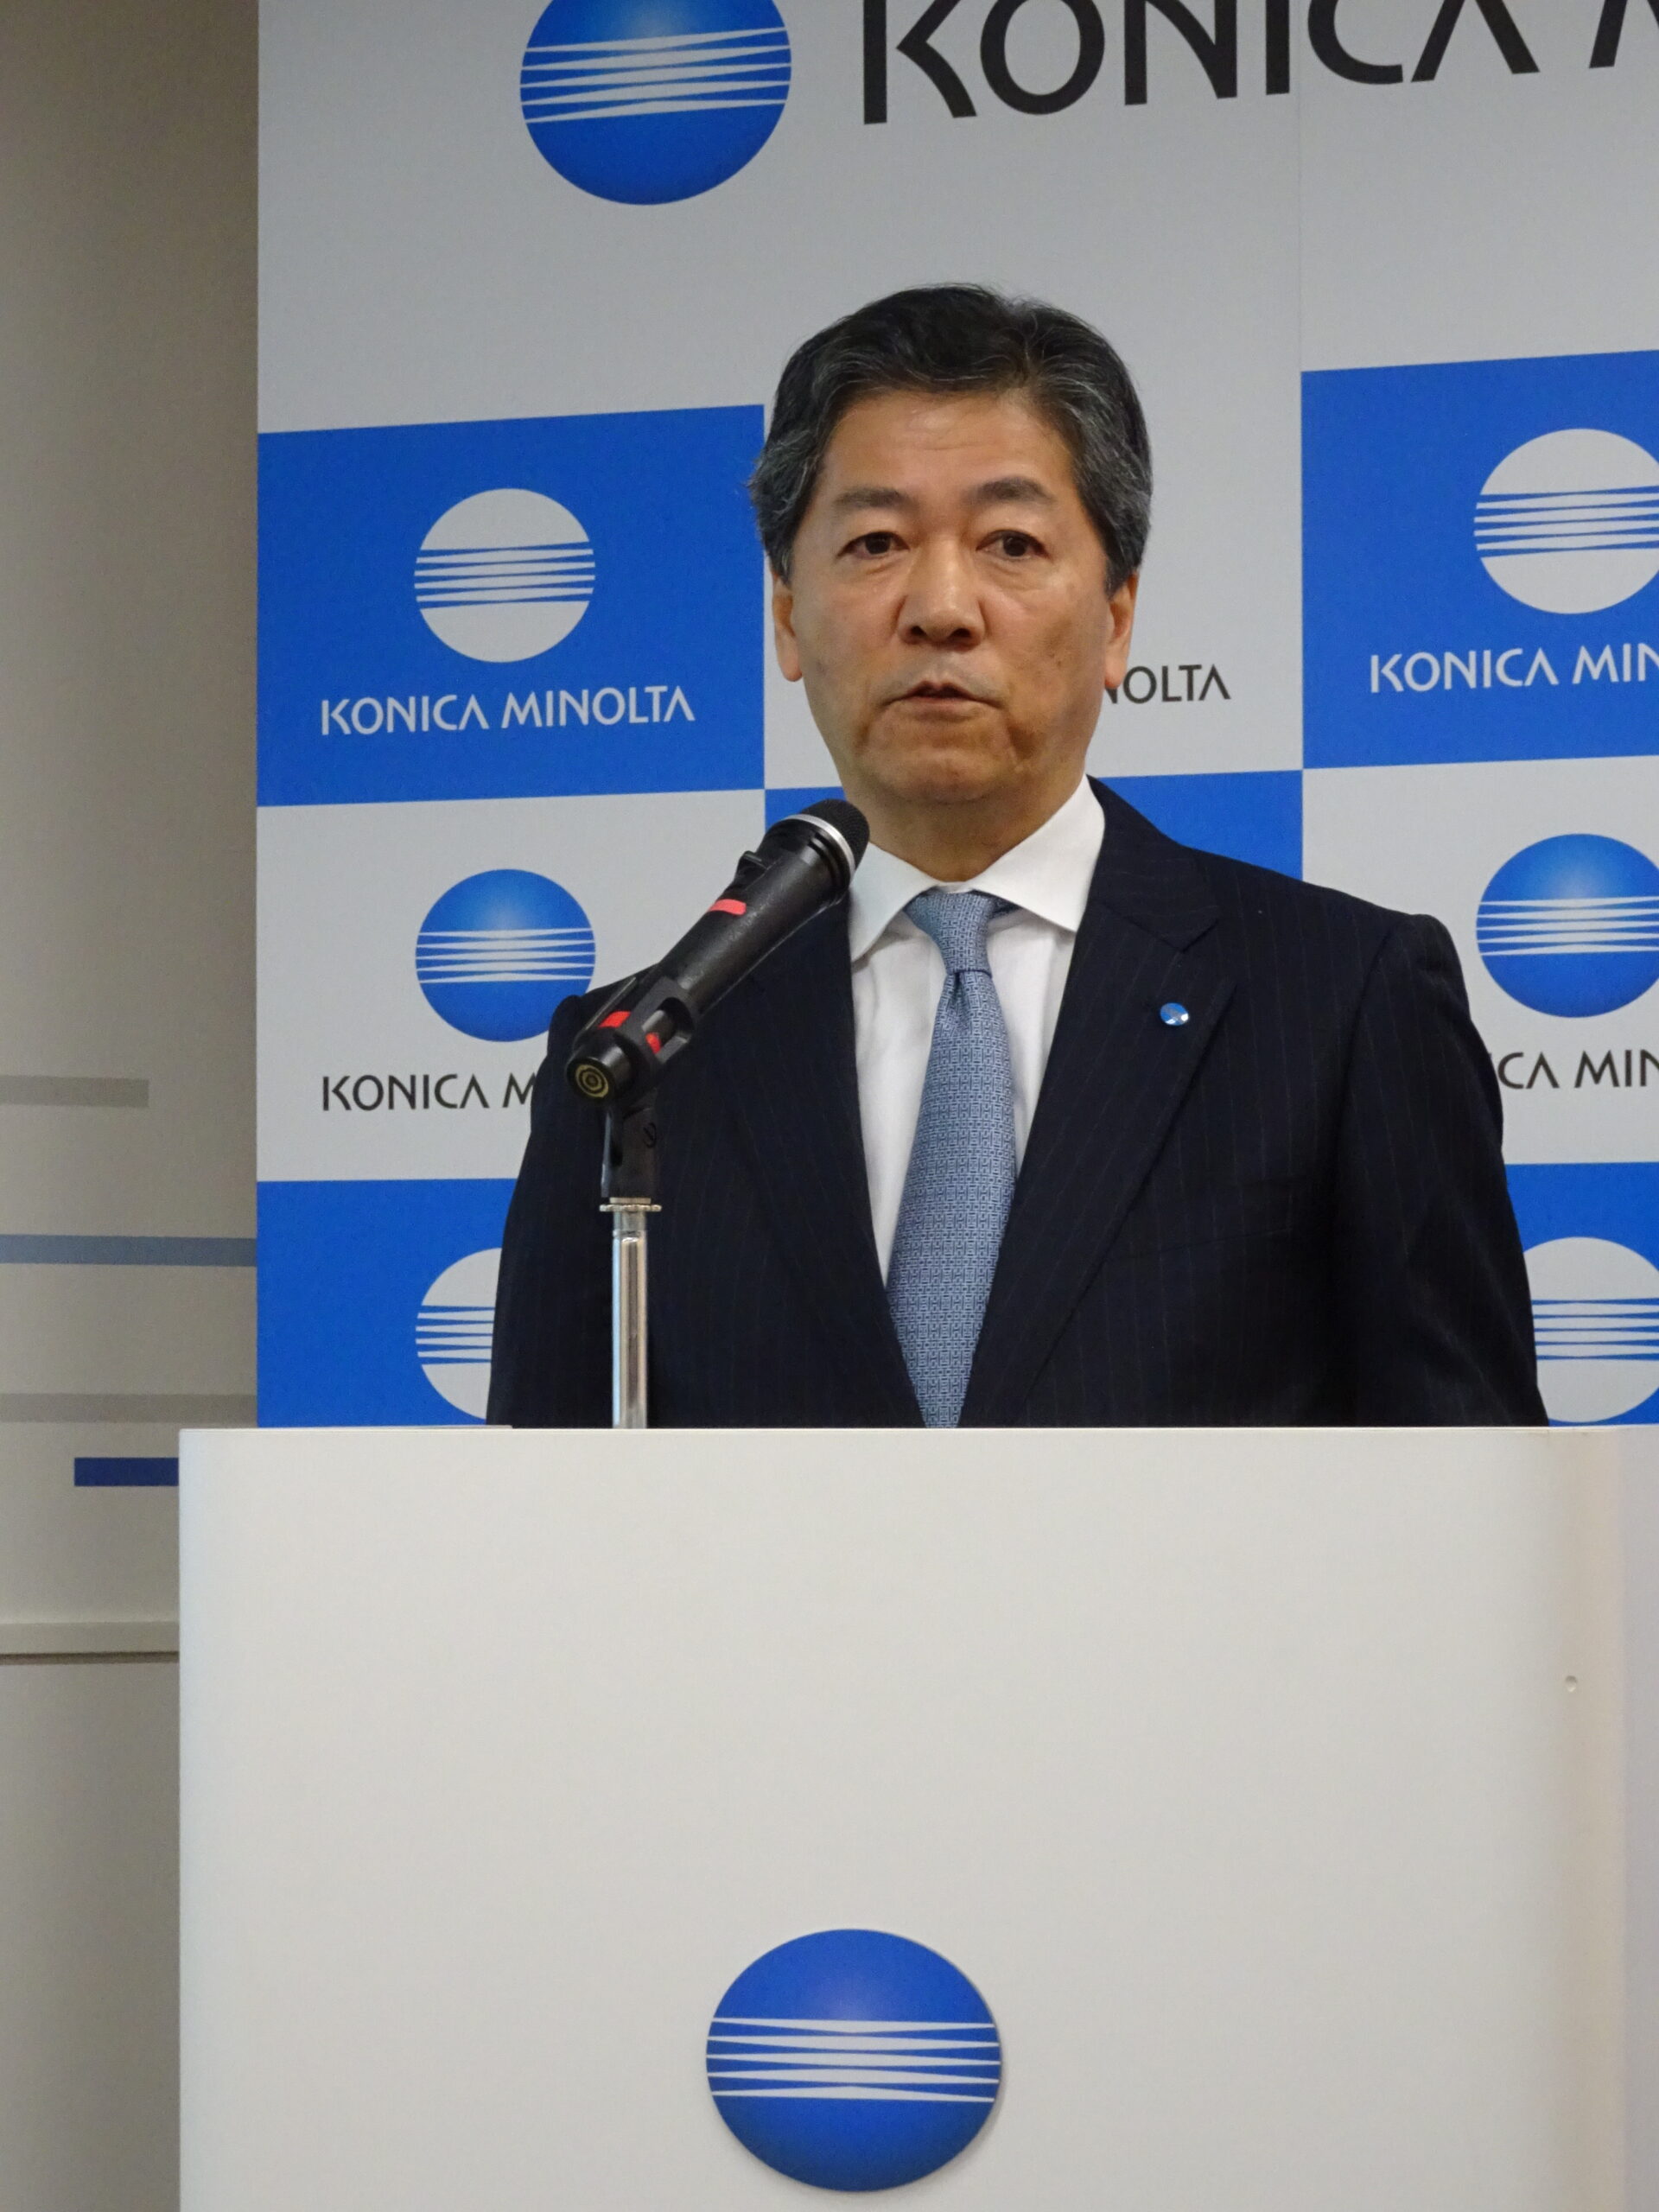 Japanese Headlines: Konica Minolta’s Digital Transformation Strategy